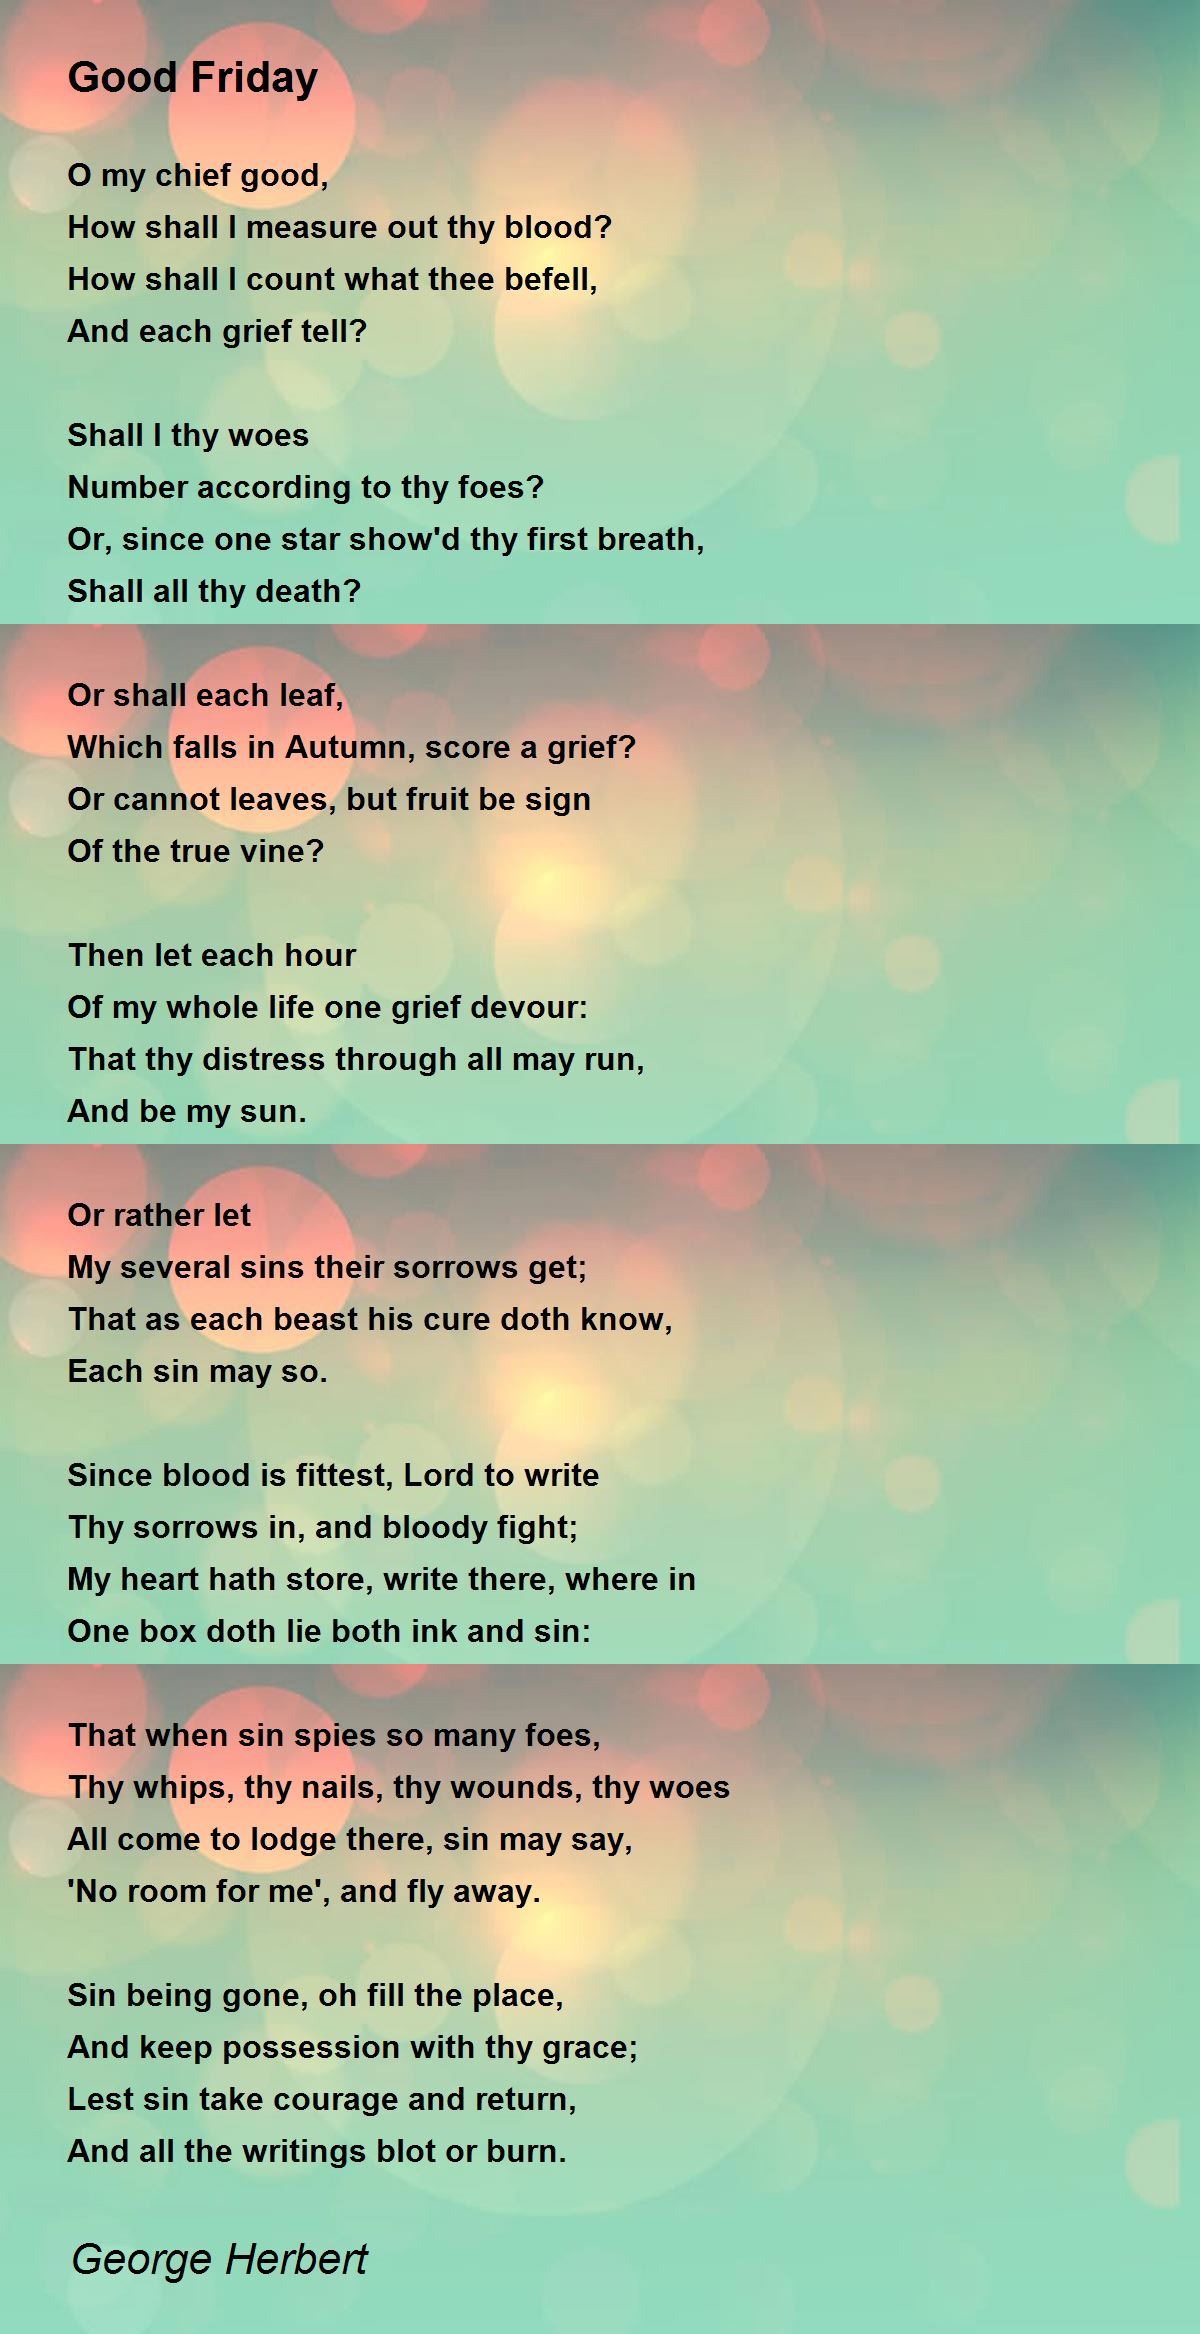 Good Friday Poem by George Herbert - Poem Hunter